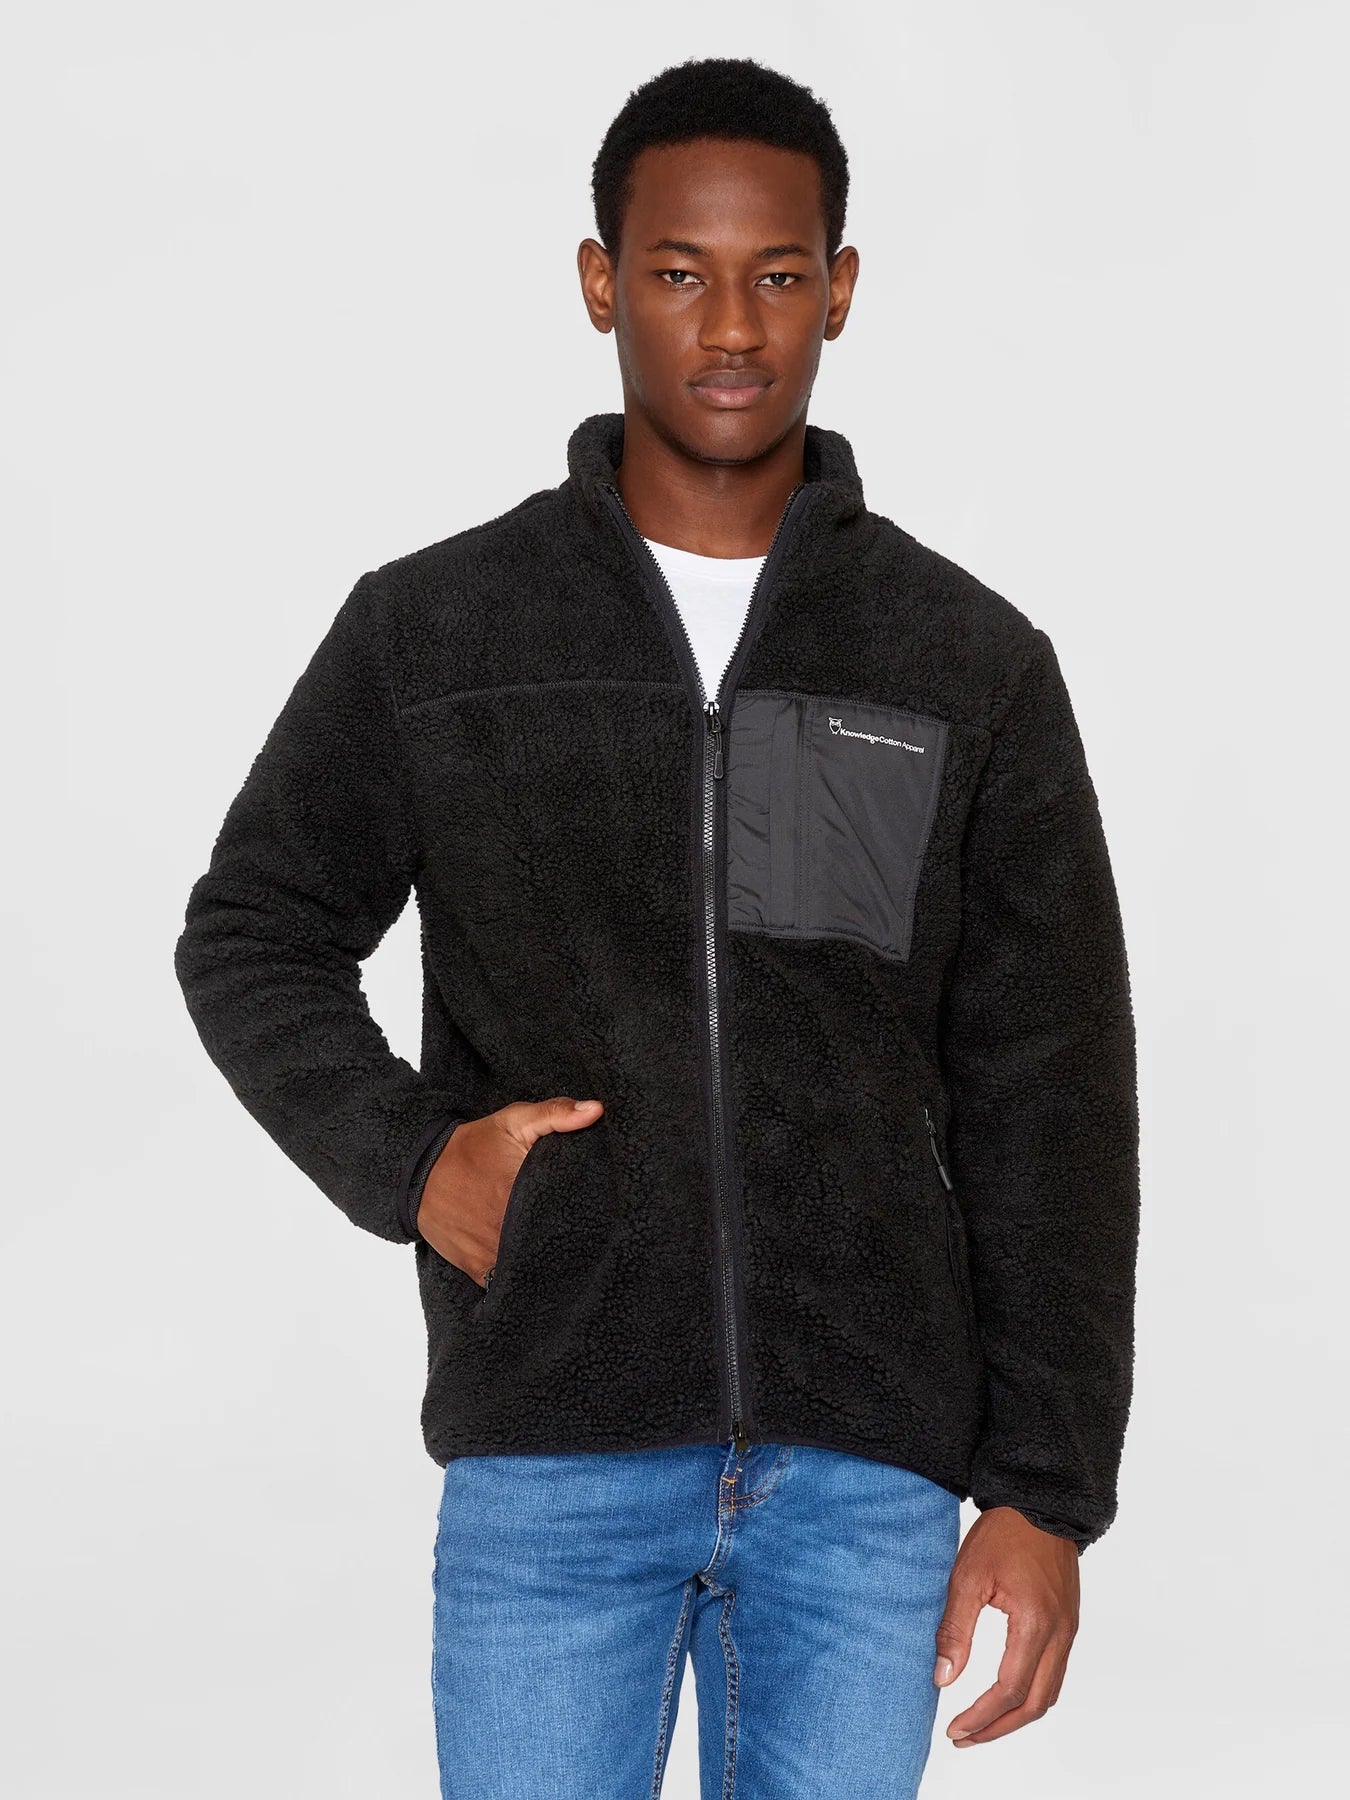 KnowledgeCotton Apparel - M's Teddy fleece zip jacket - 100% Recycled PET - Weekendbee - sustainable sportswear